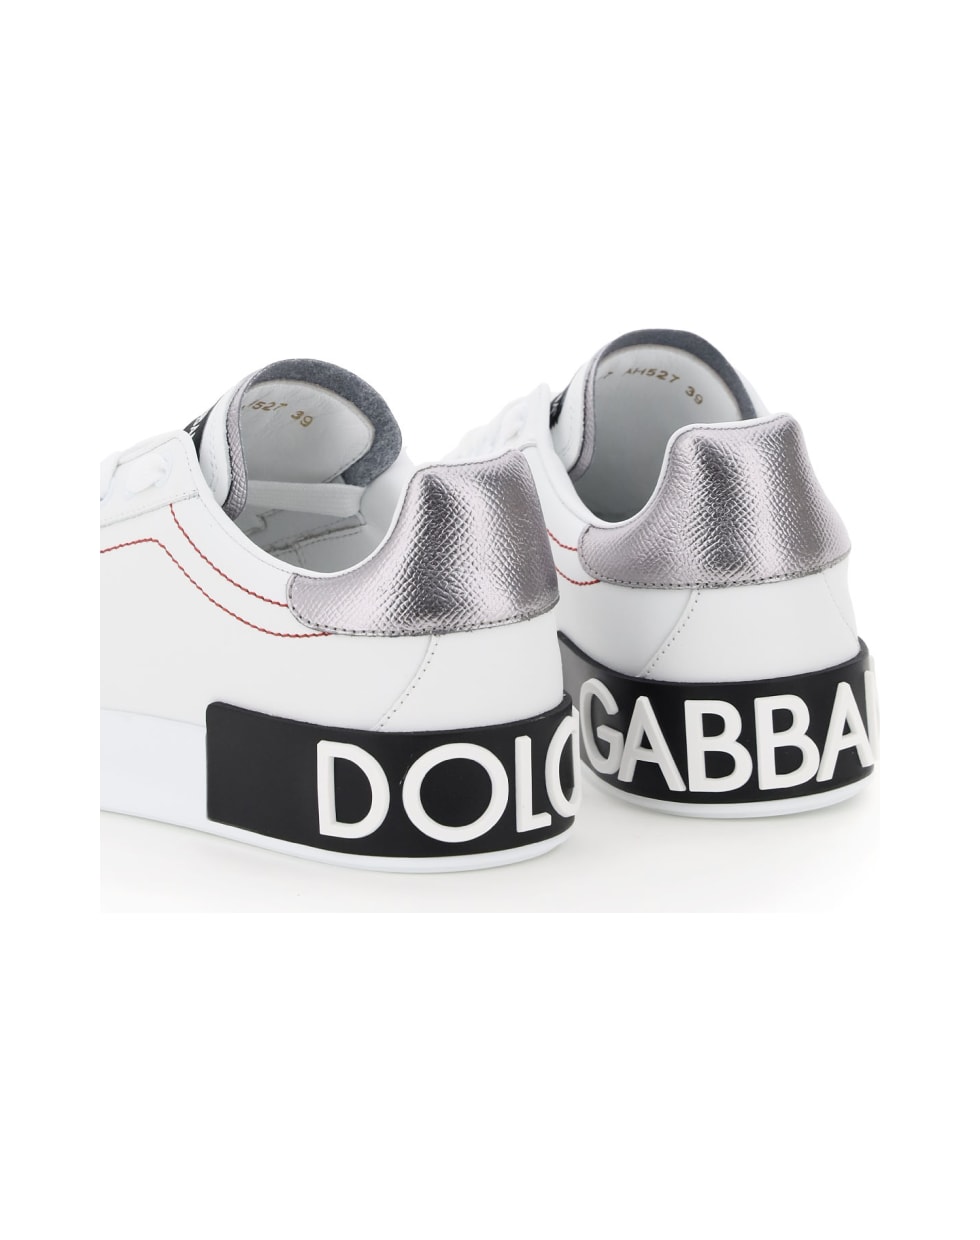 Dolce & Gabbana Portofino Leather Sneakers - Rosa Bianco Argento